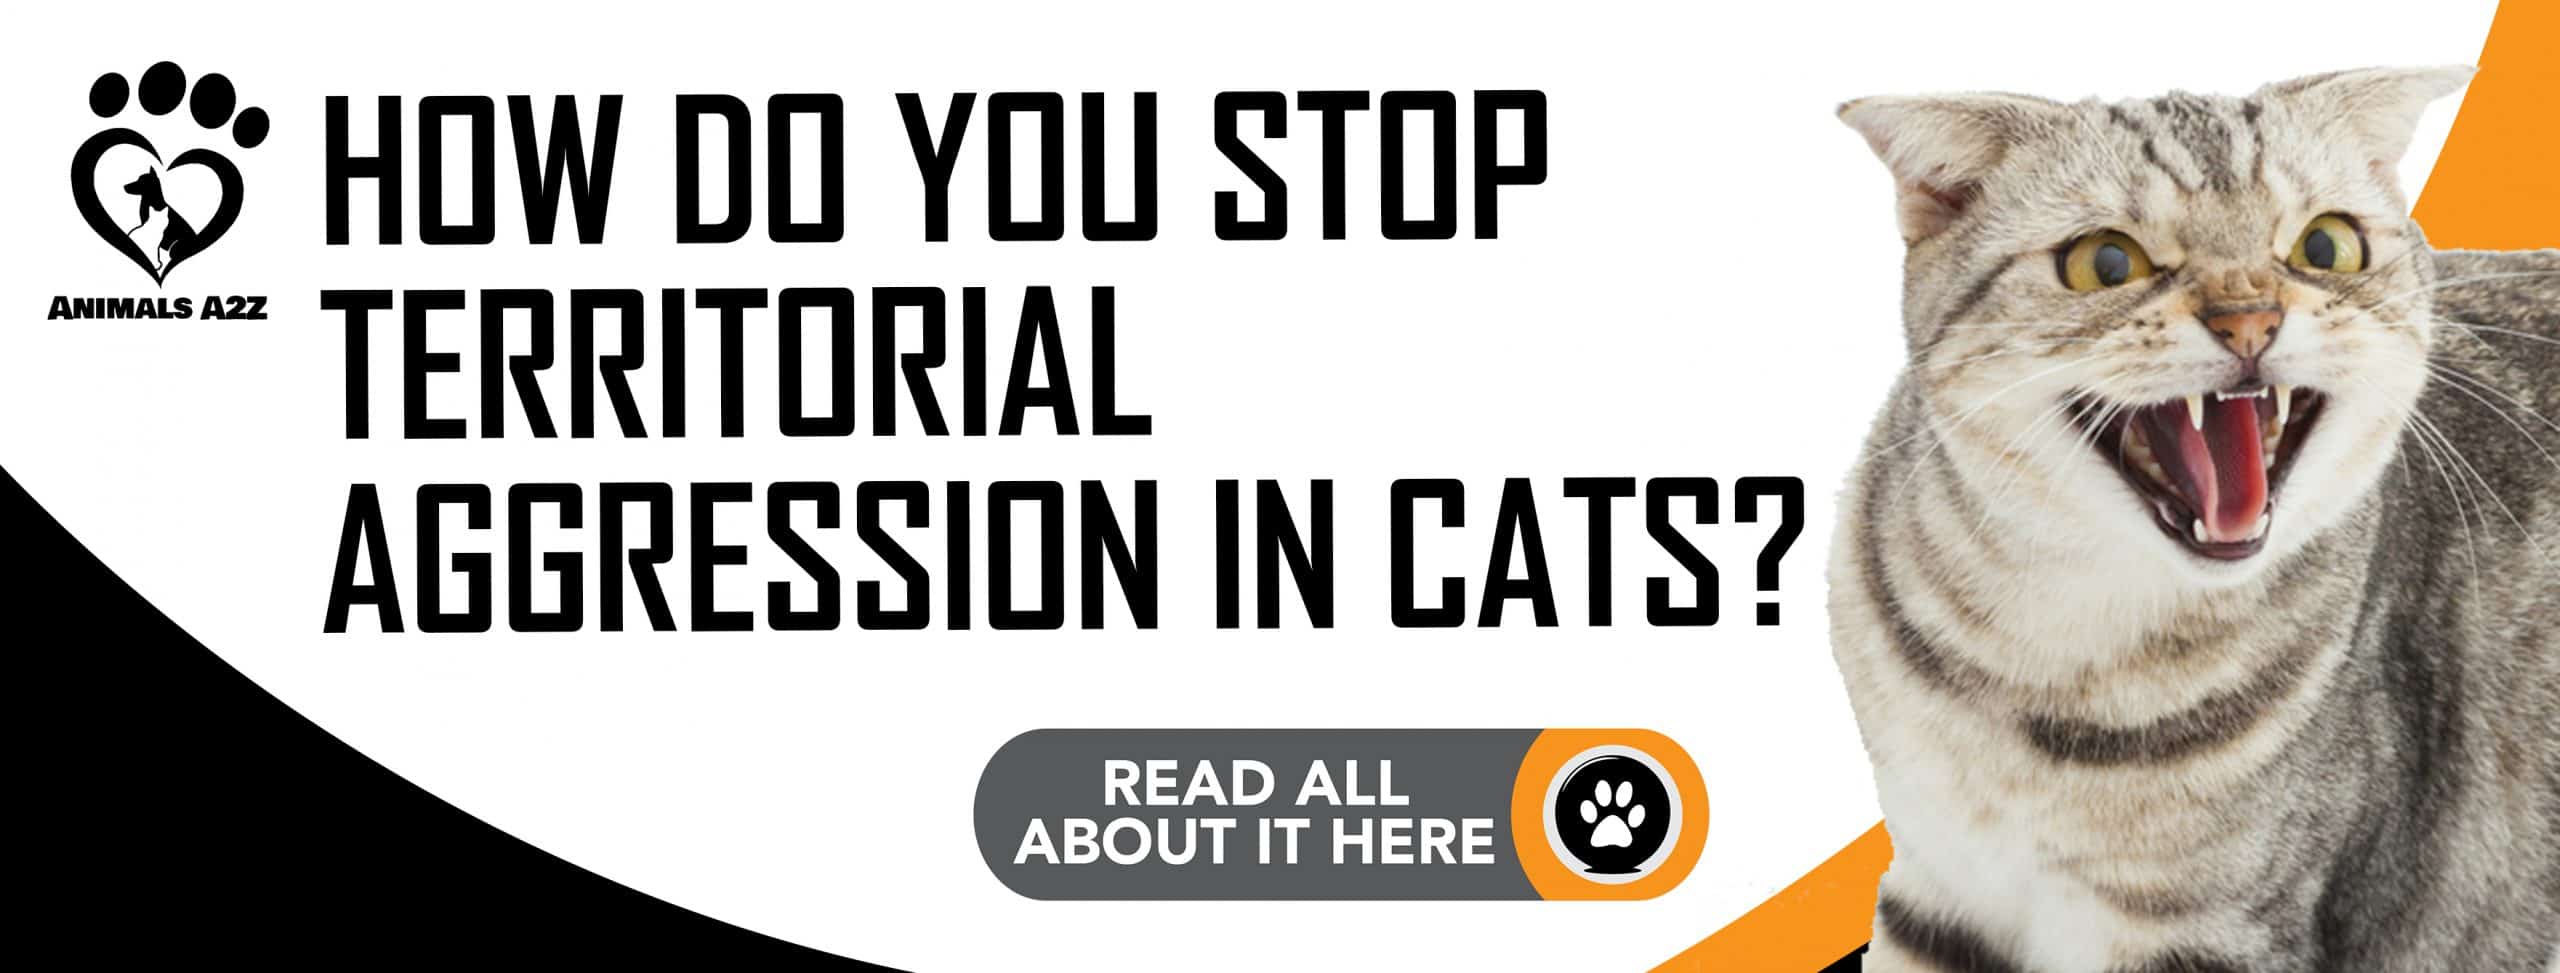 Wie kann man territoriale Aggression bei Katzen stoppen?